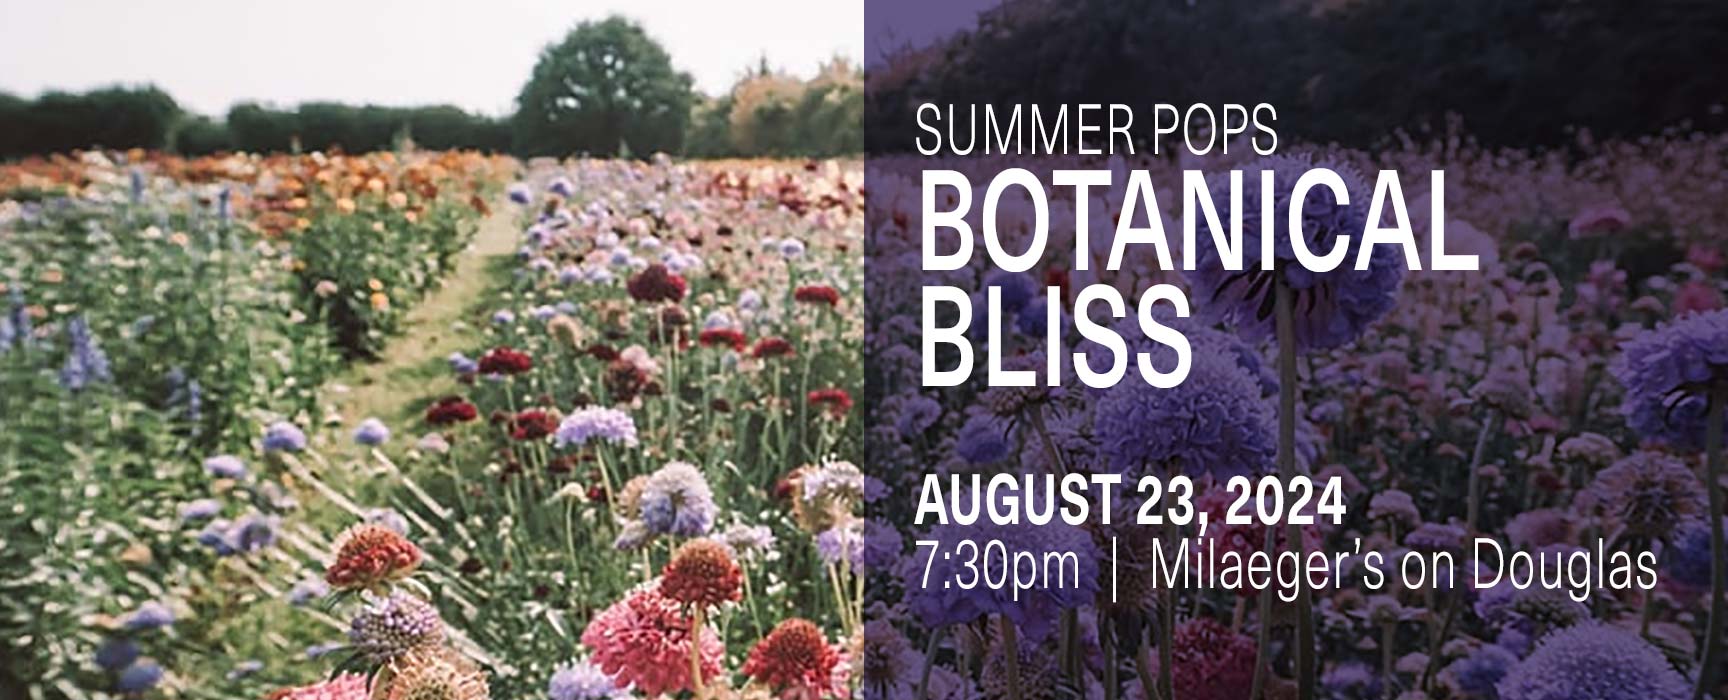 RSO botanical bliss concert on August 23